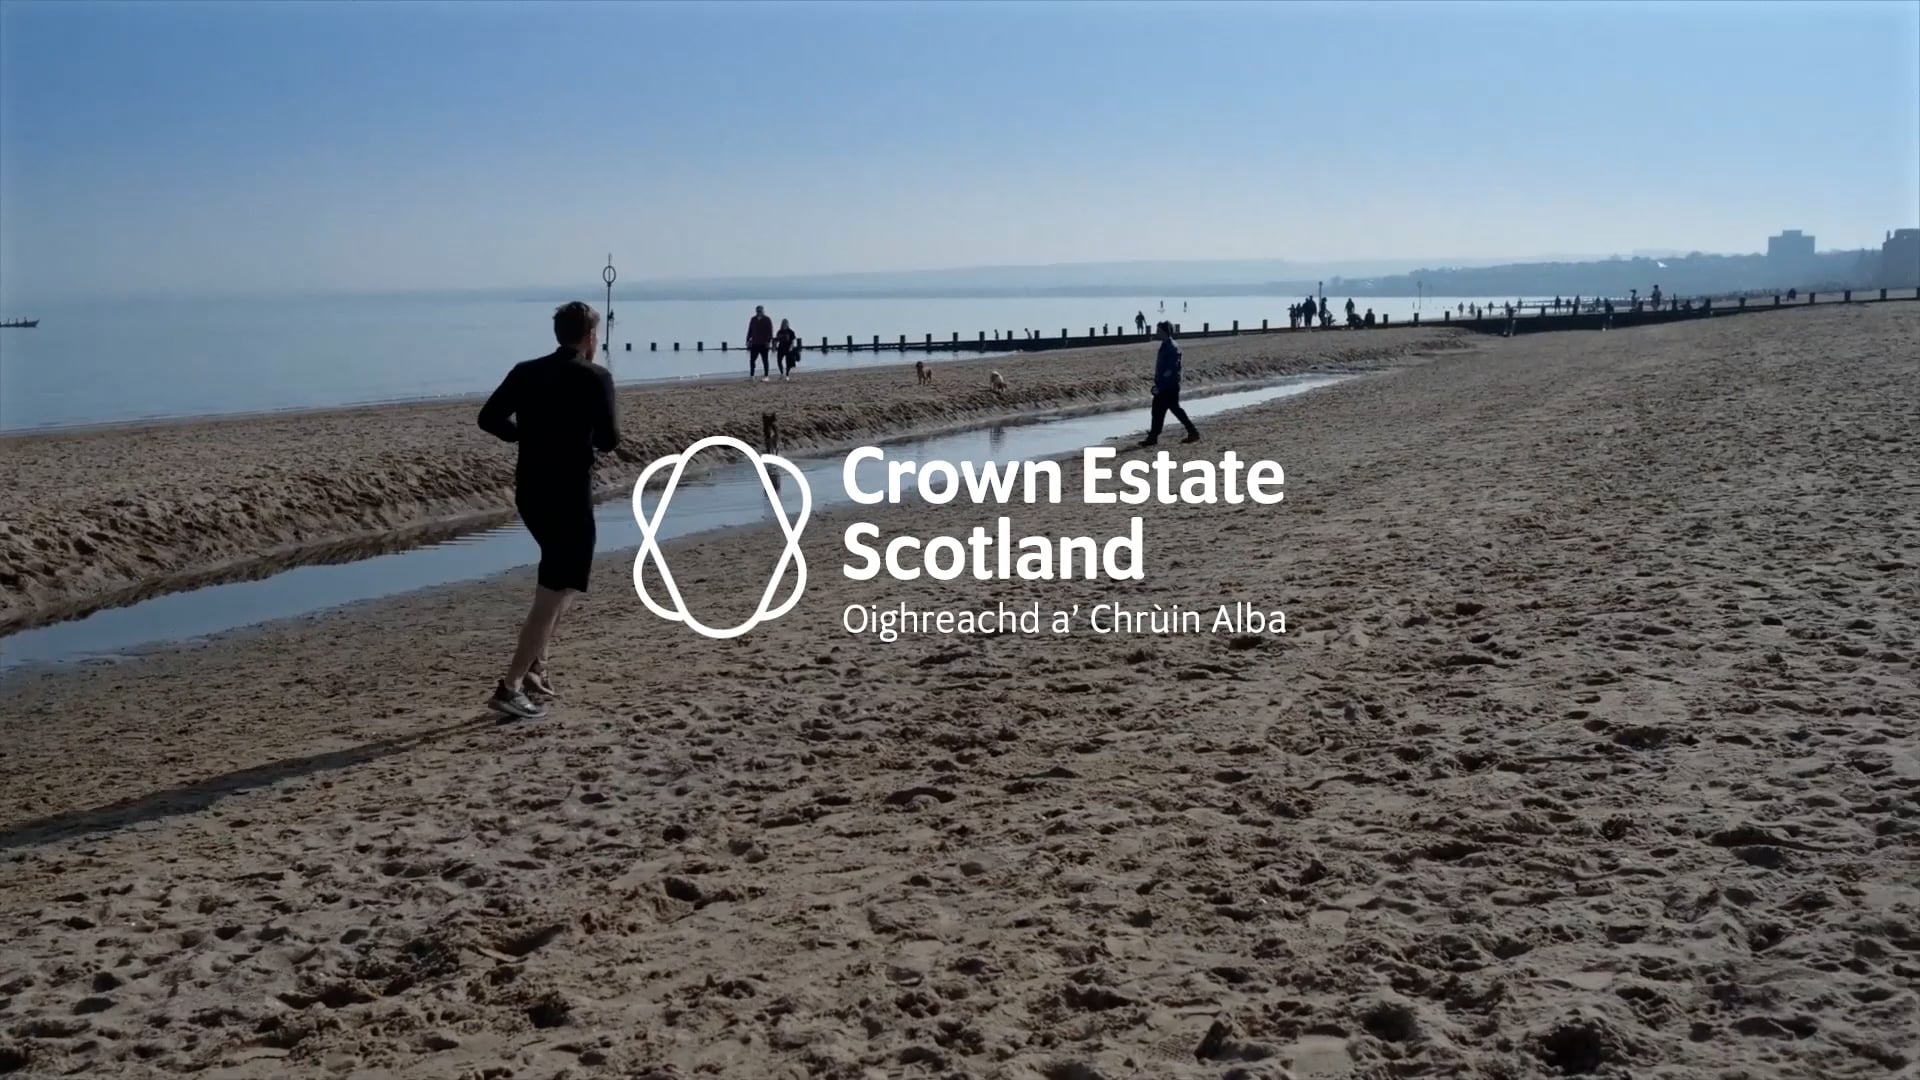 Crown Estate Scotland turns 5